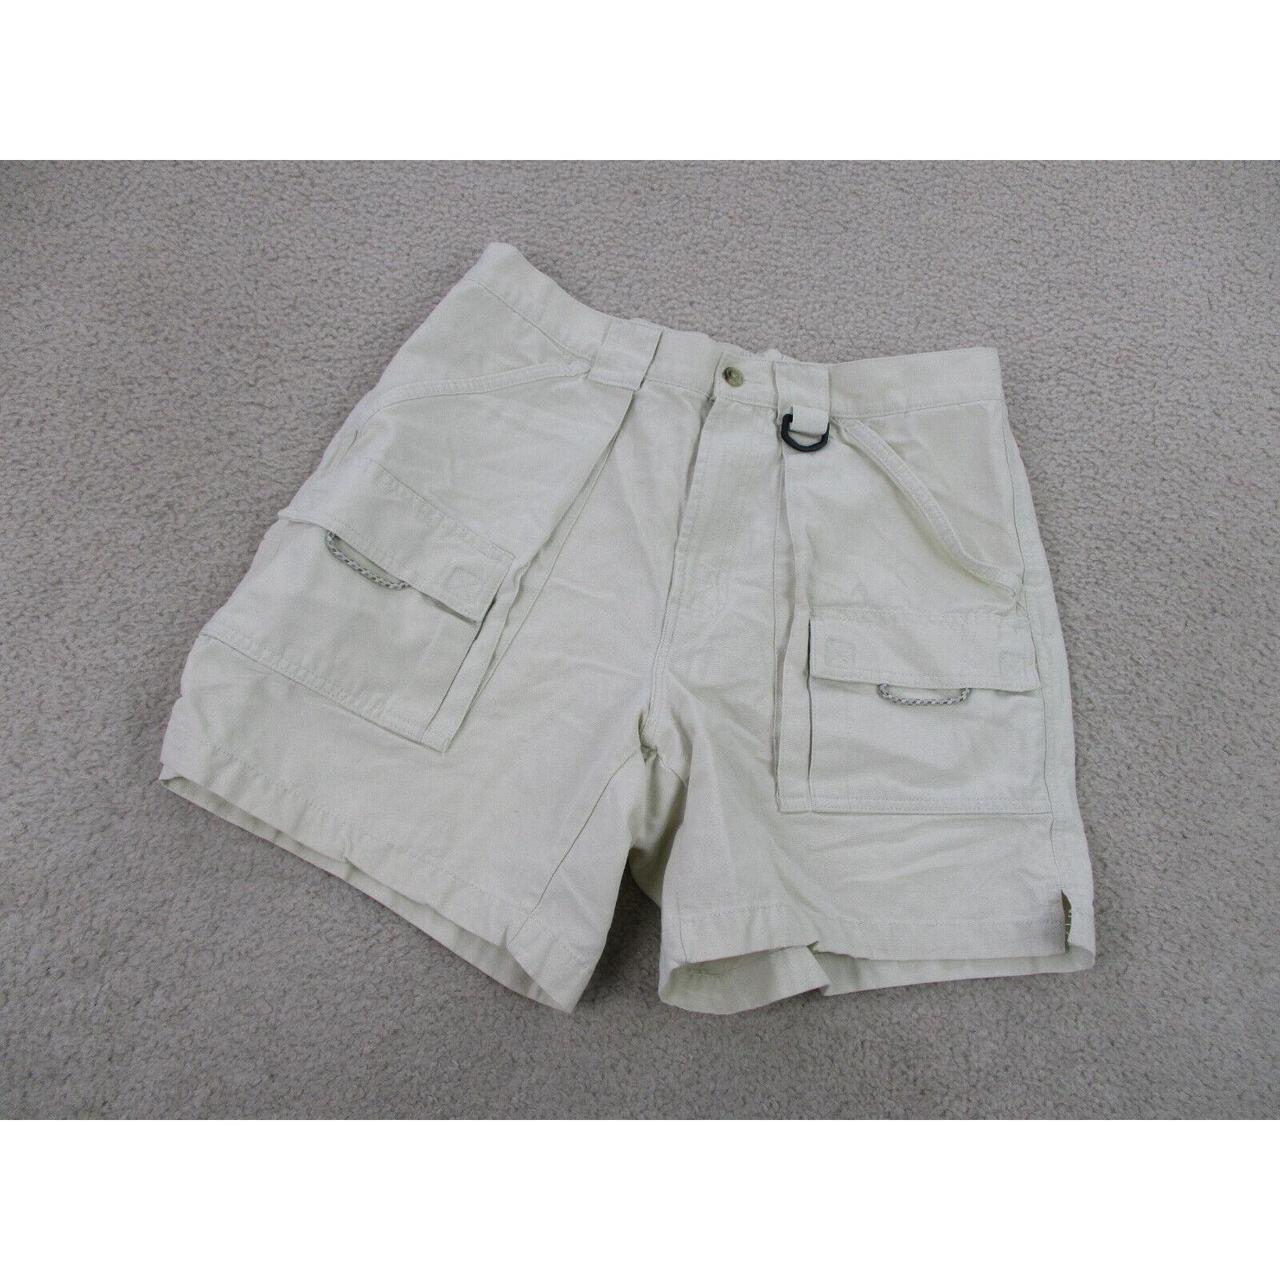 Chinon Men's Brown Shorts (2)